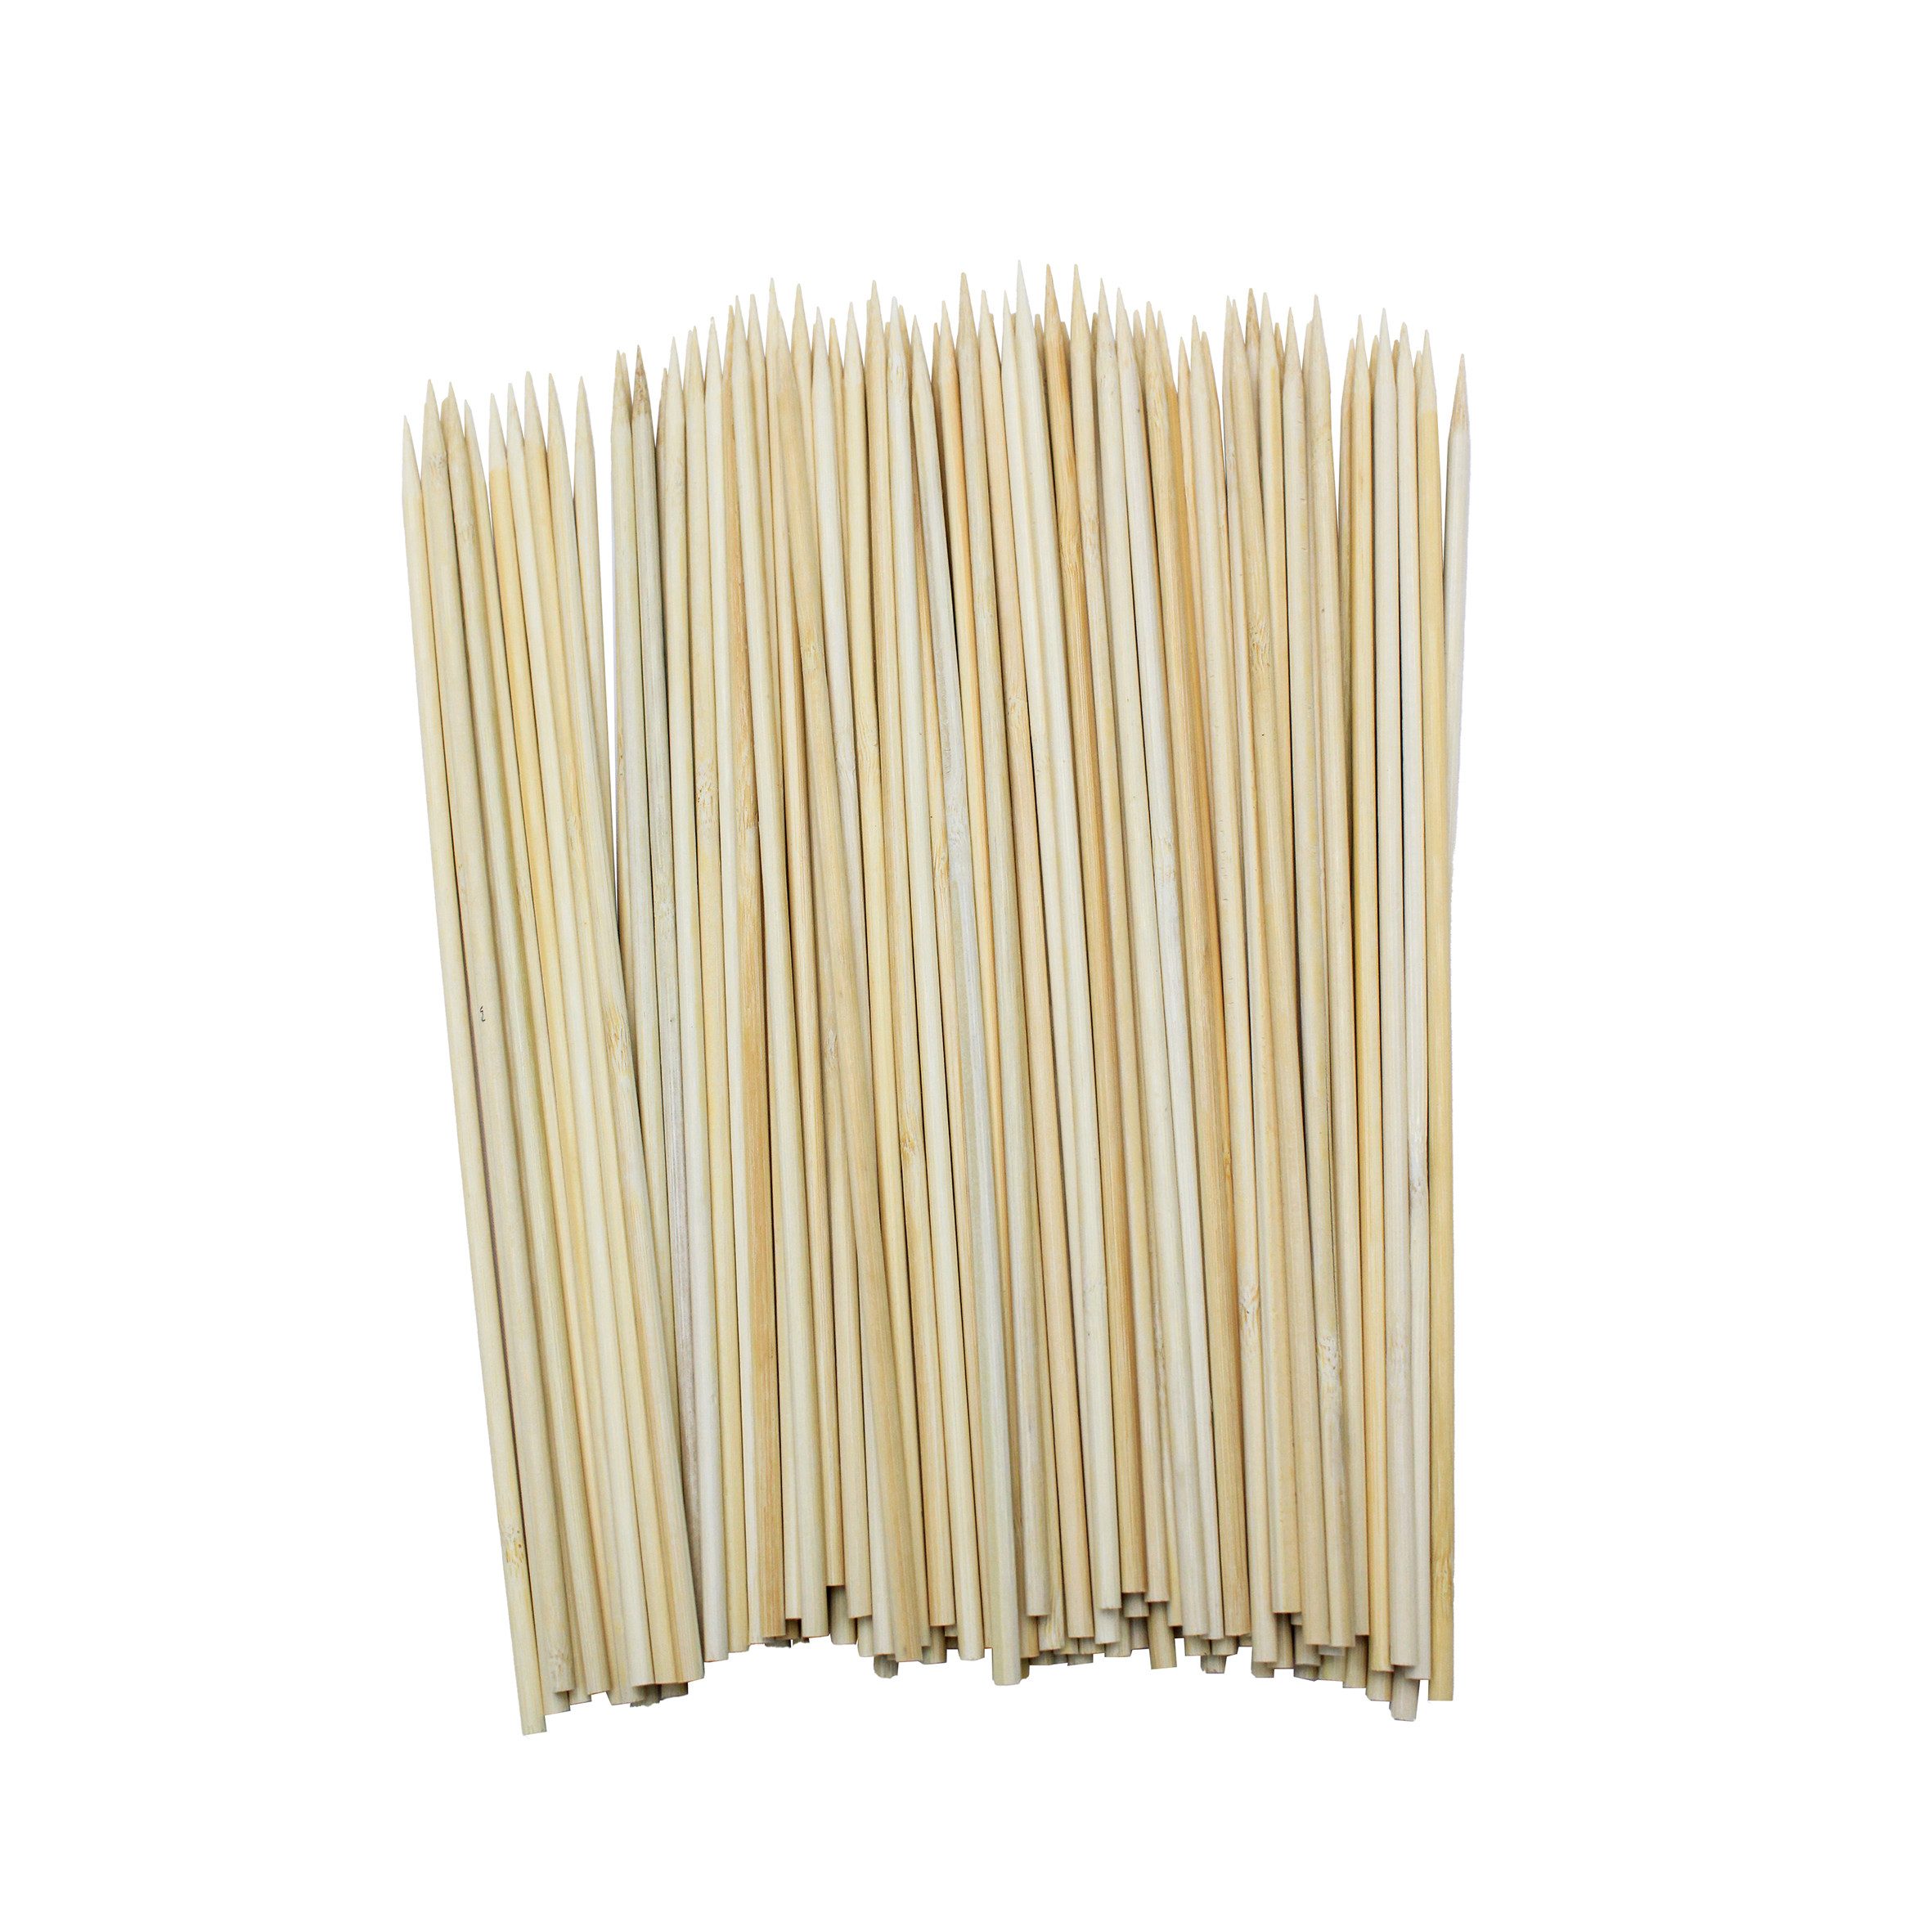 Spetebo Rankhilfe Bambus Splittstab natur - 200 StückSet, 200 St., Bambus Splittstäbe, Anzuchthilfe für Pflanztöpfe und Beete